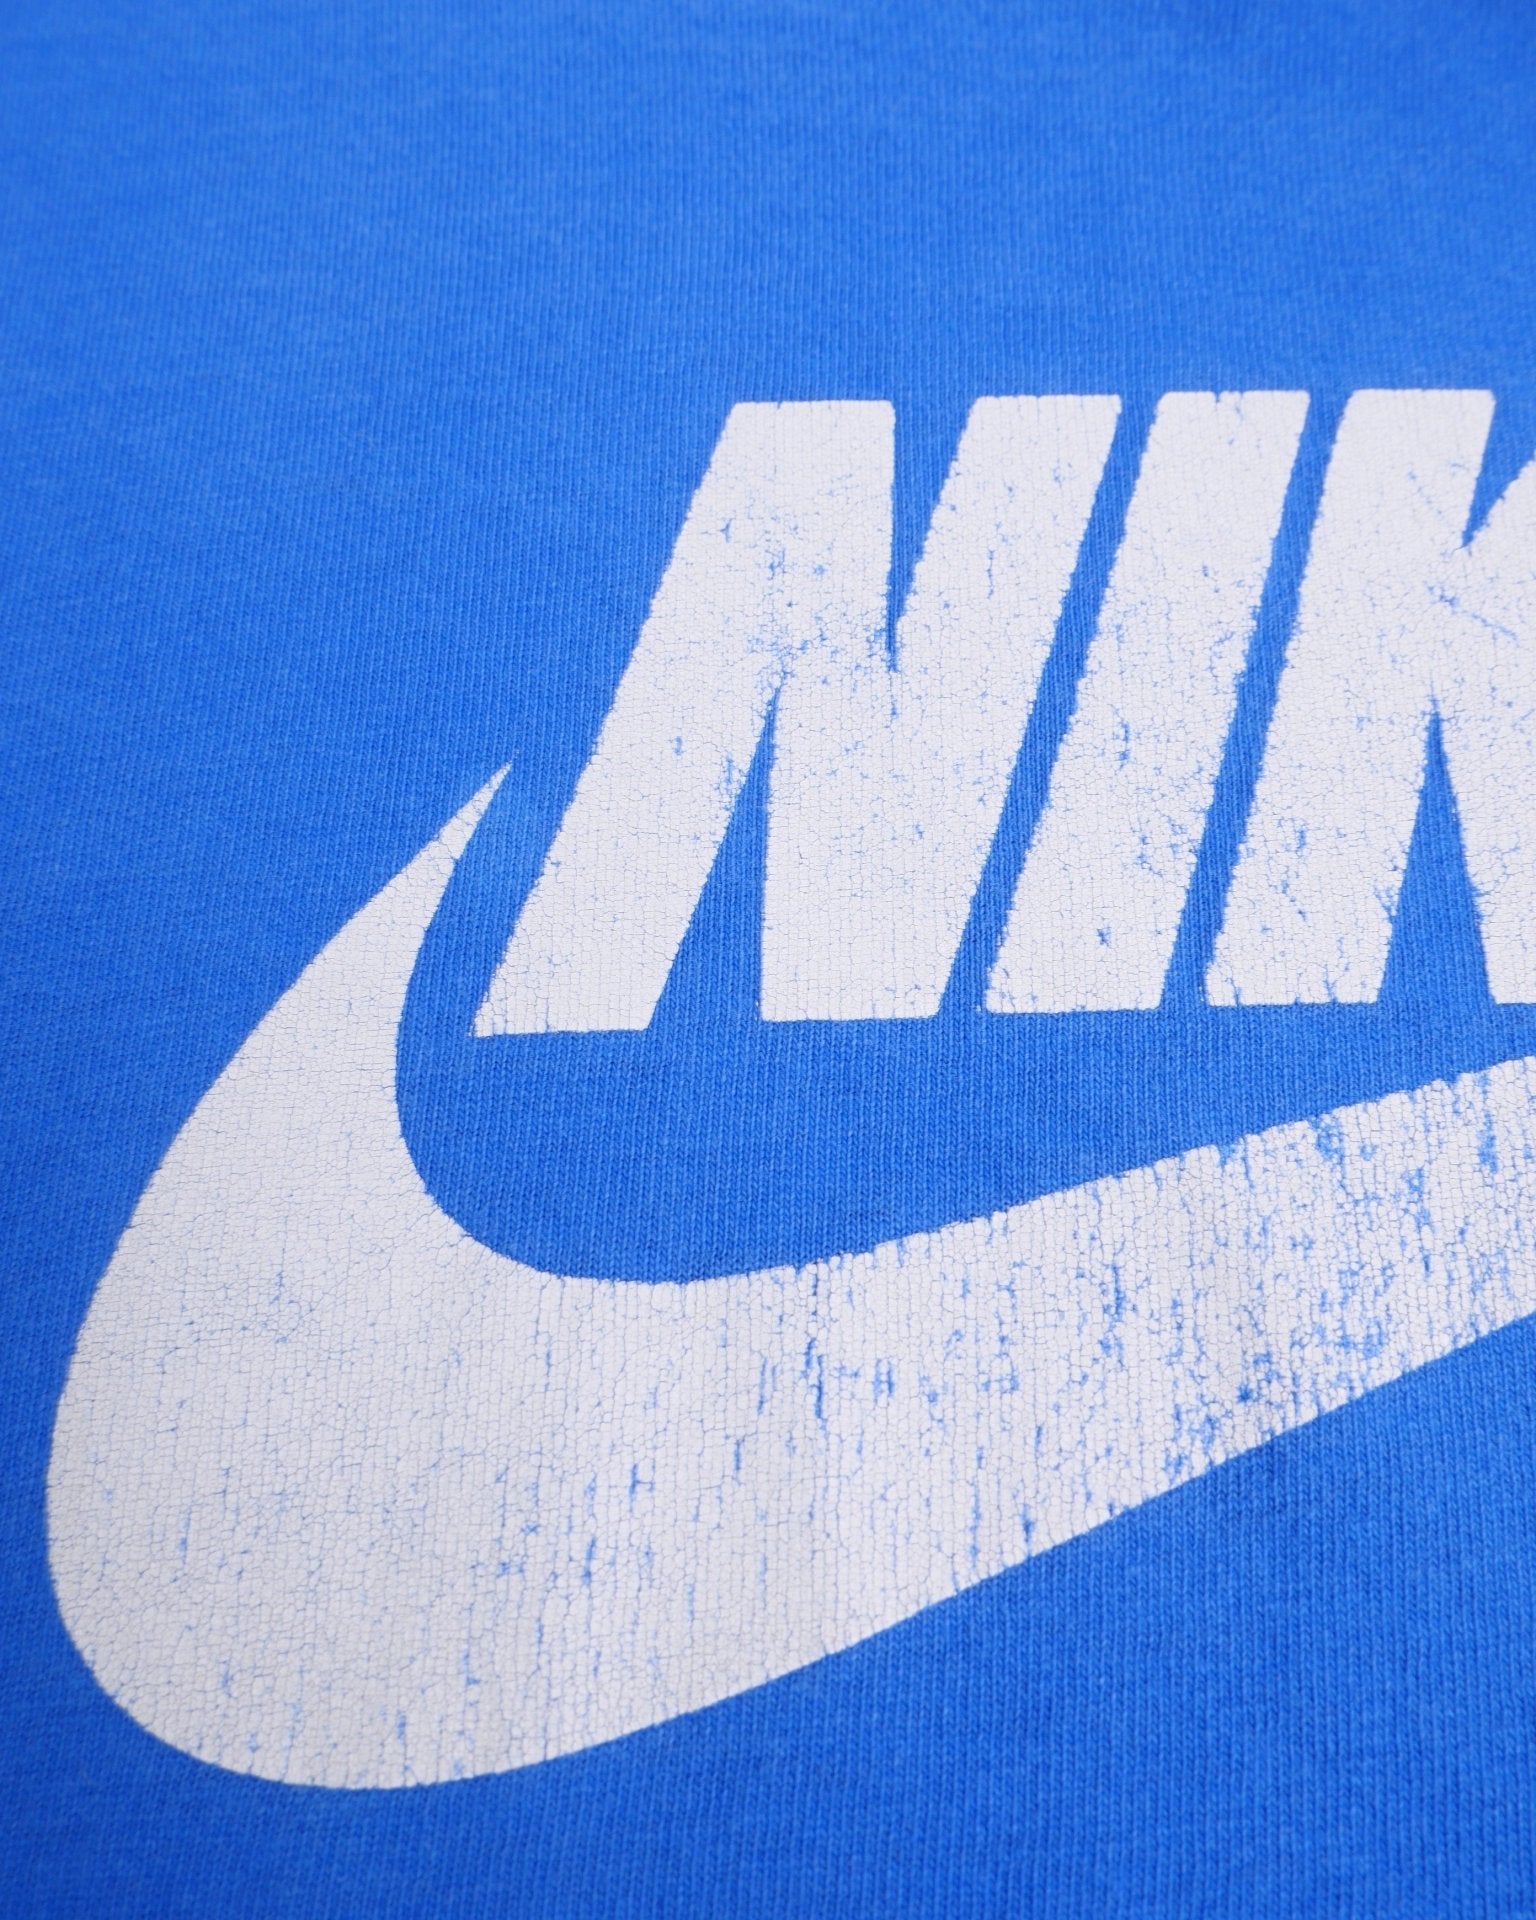 nike printed Logo blue Shirt - Peeces